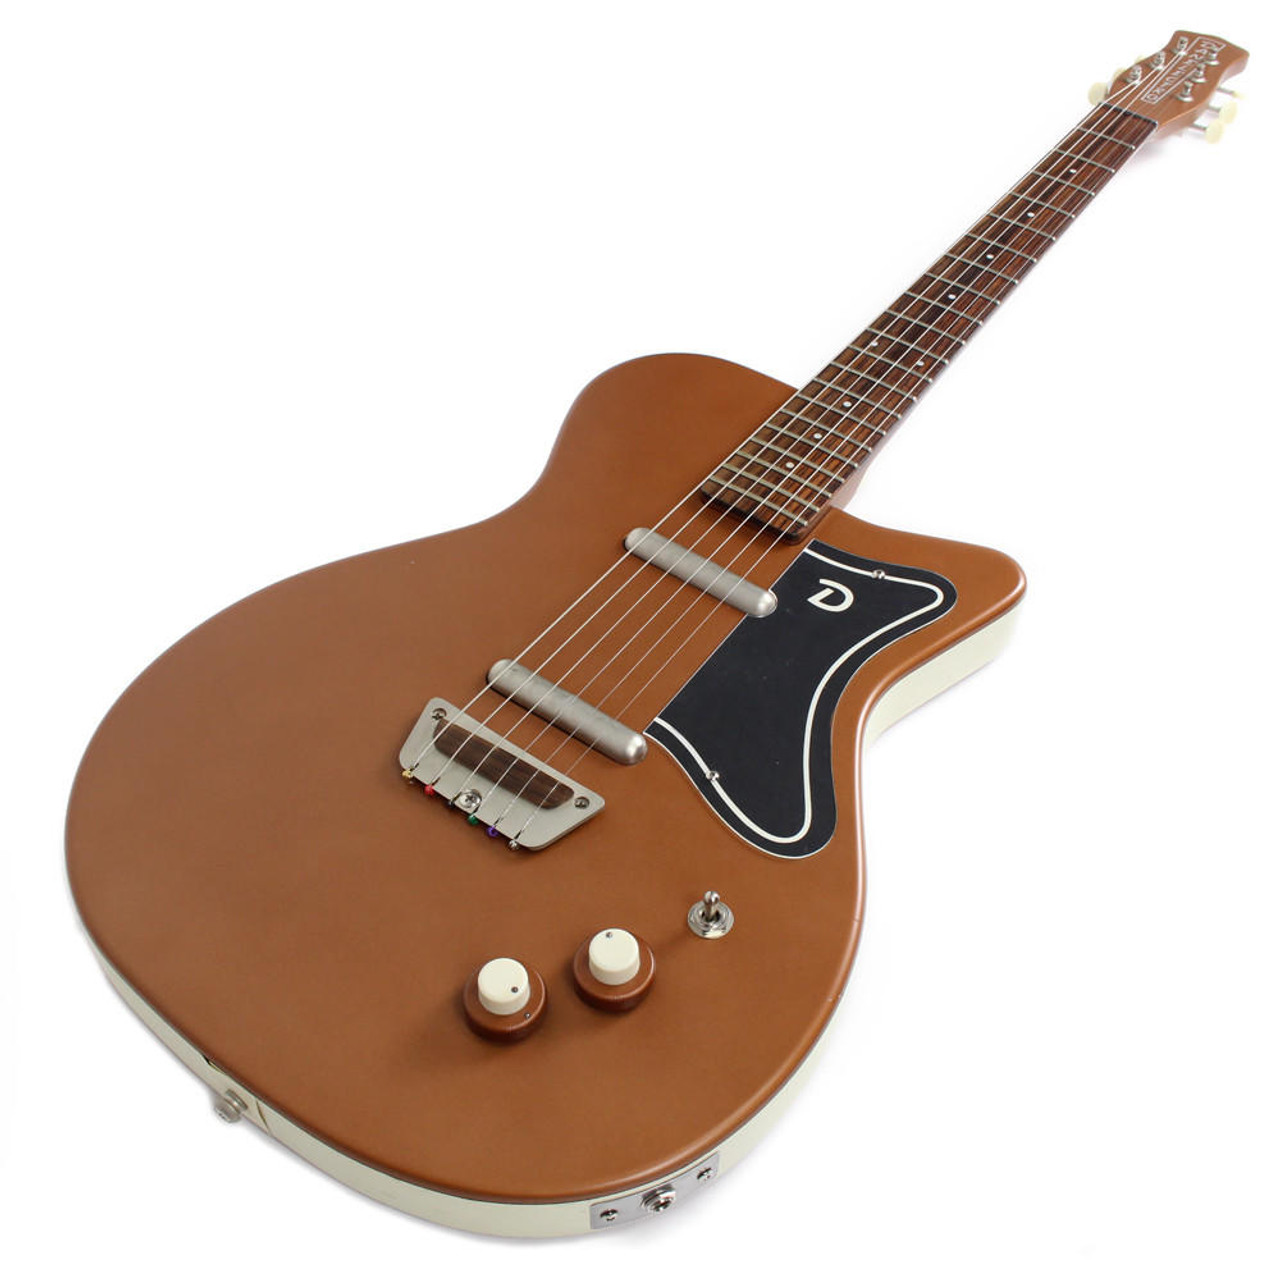 Used Danelectro U2 Electric Guitar in Satin Copper